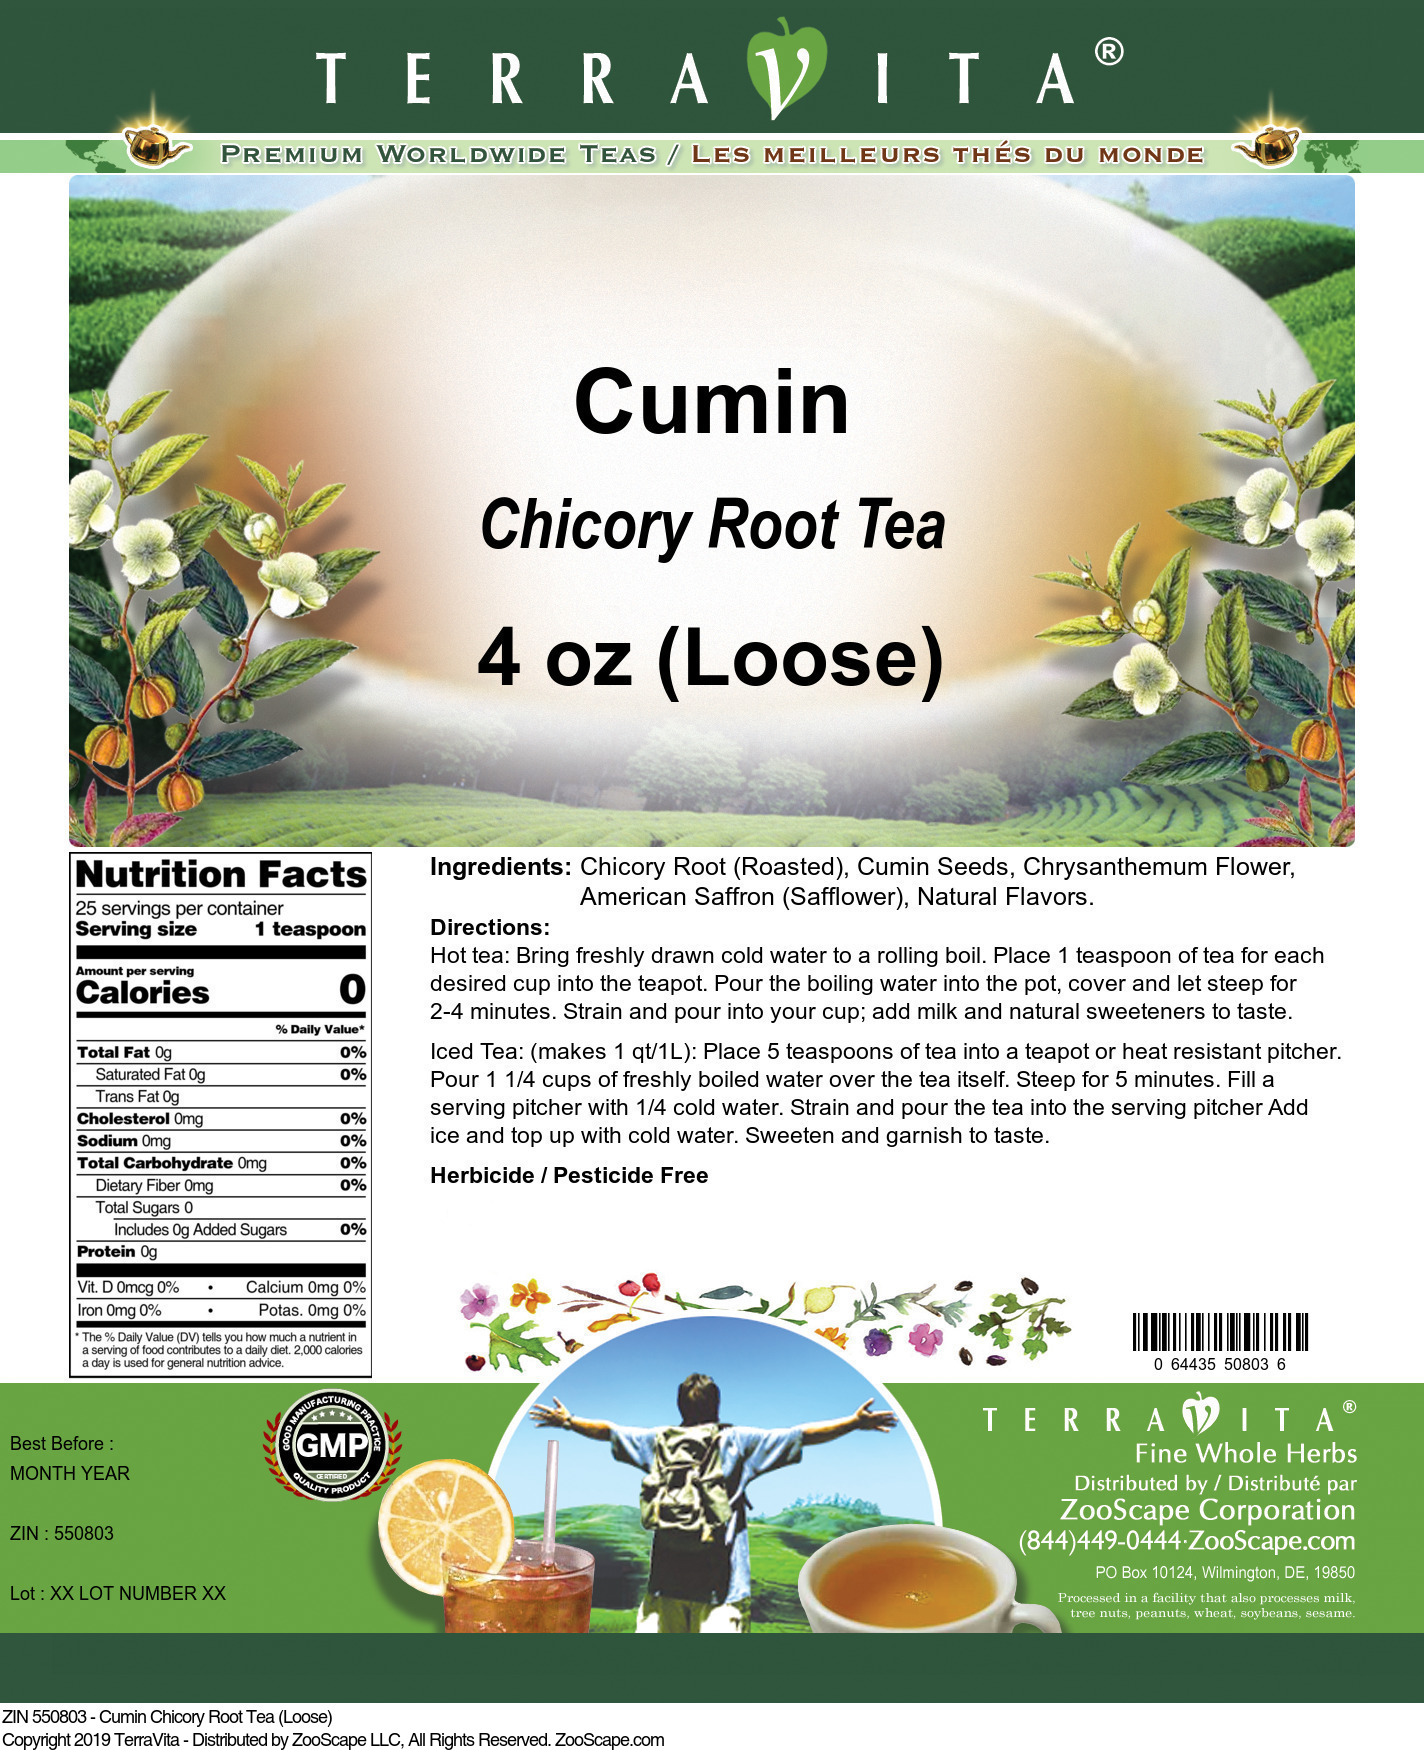 Cumin Chicory Root Tea (Loose) - Label